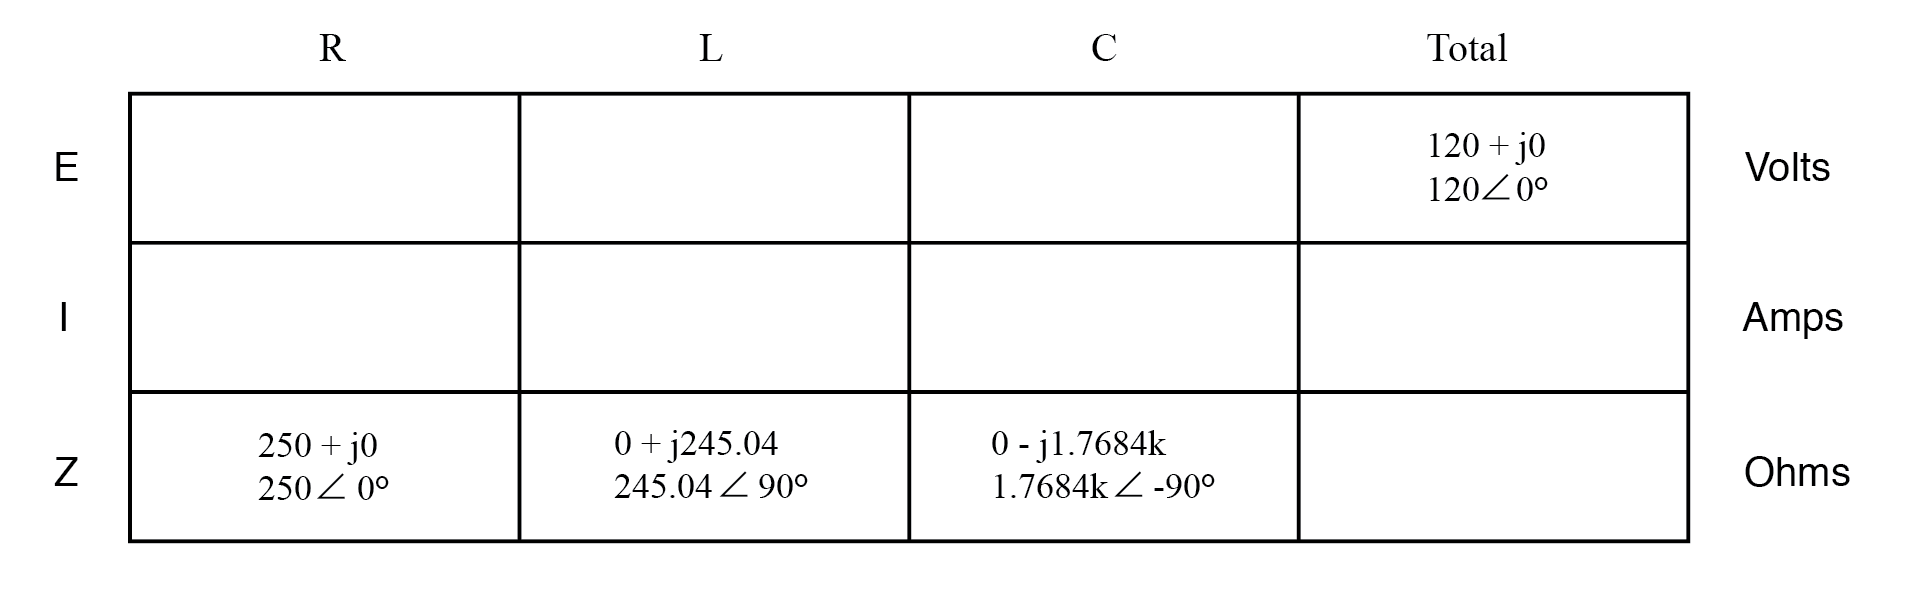 analysis table for circuit